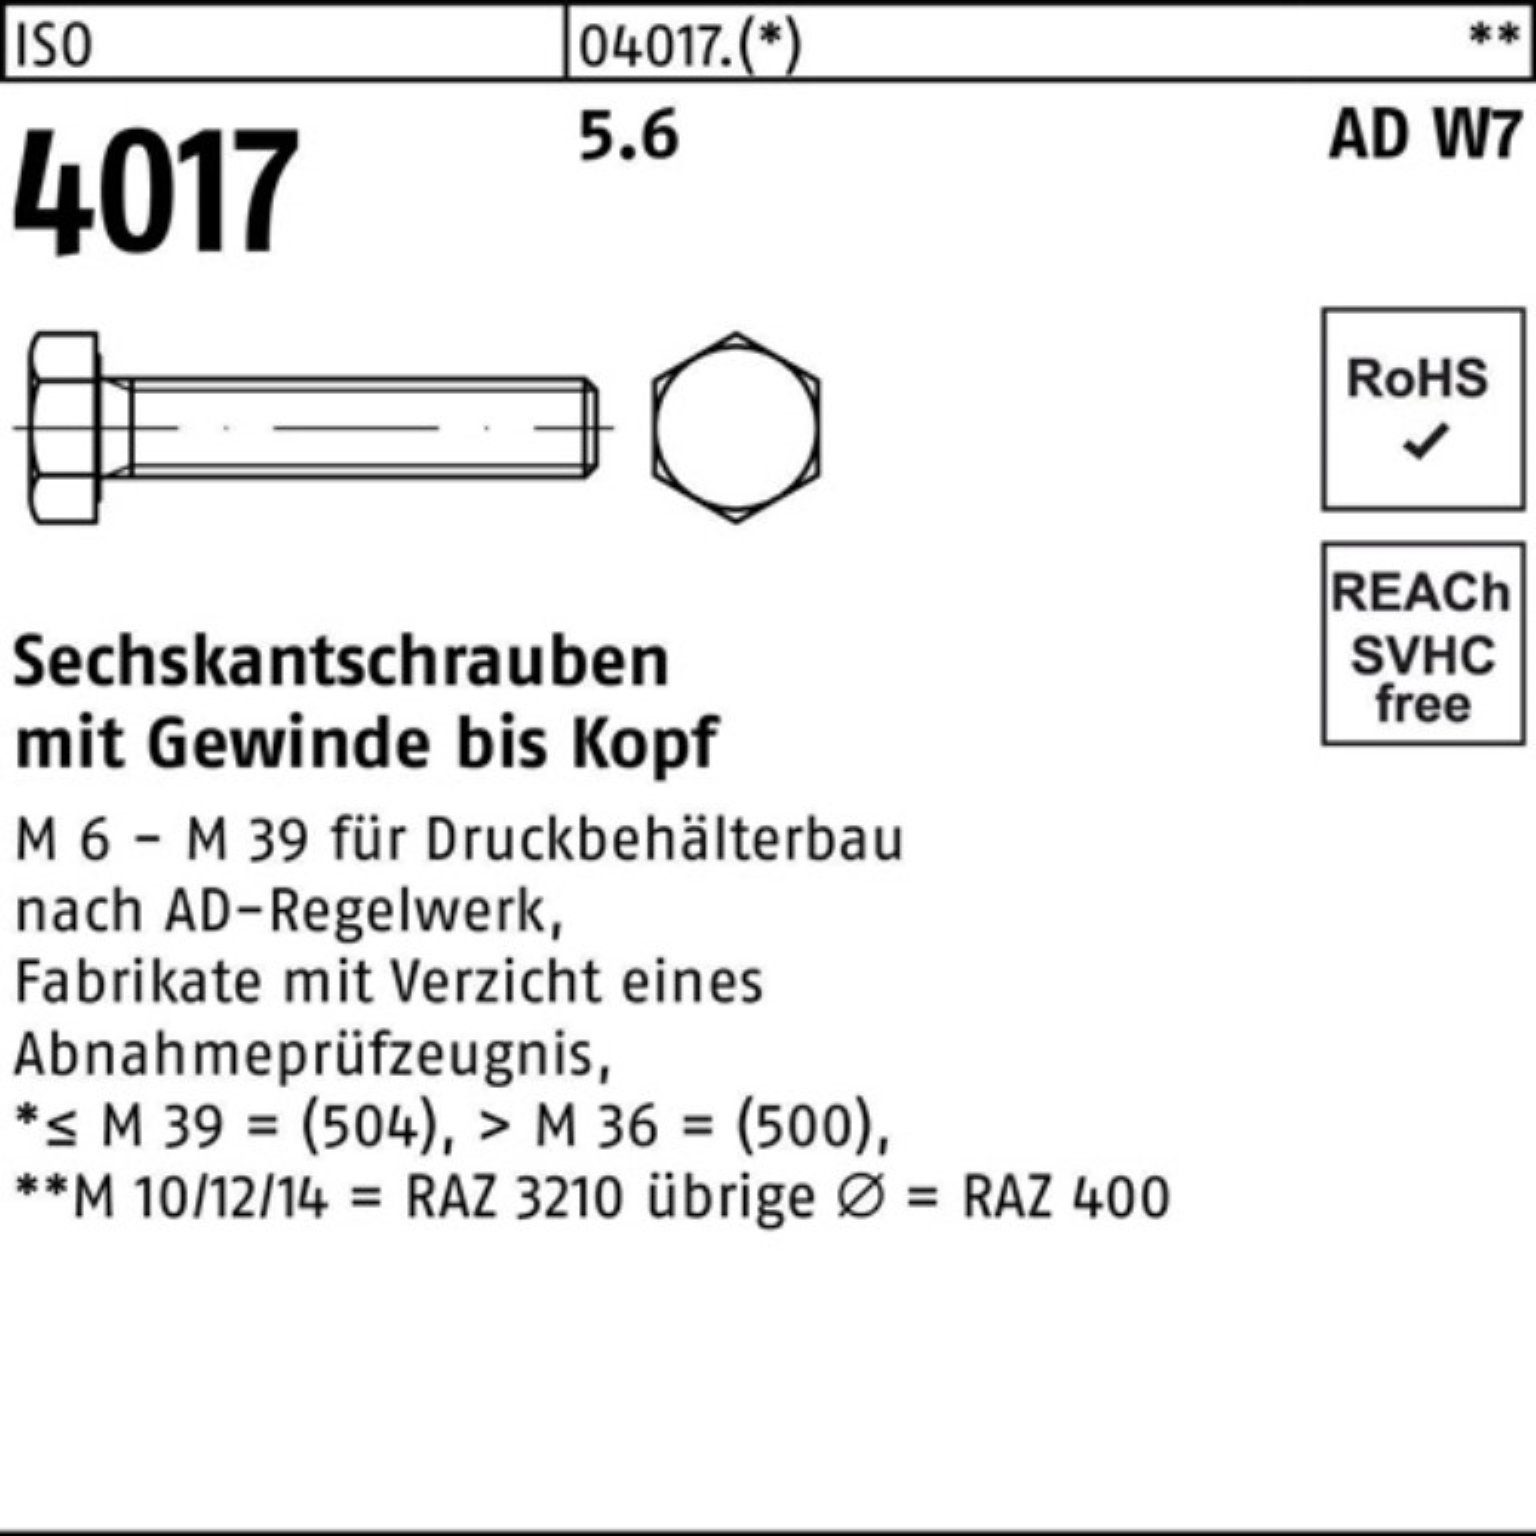 Bufab Sechskantschraube 100er Pack Sechskantschraube ISO 4017 VG M16x 65 5.6 AD W7 25 Stück I